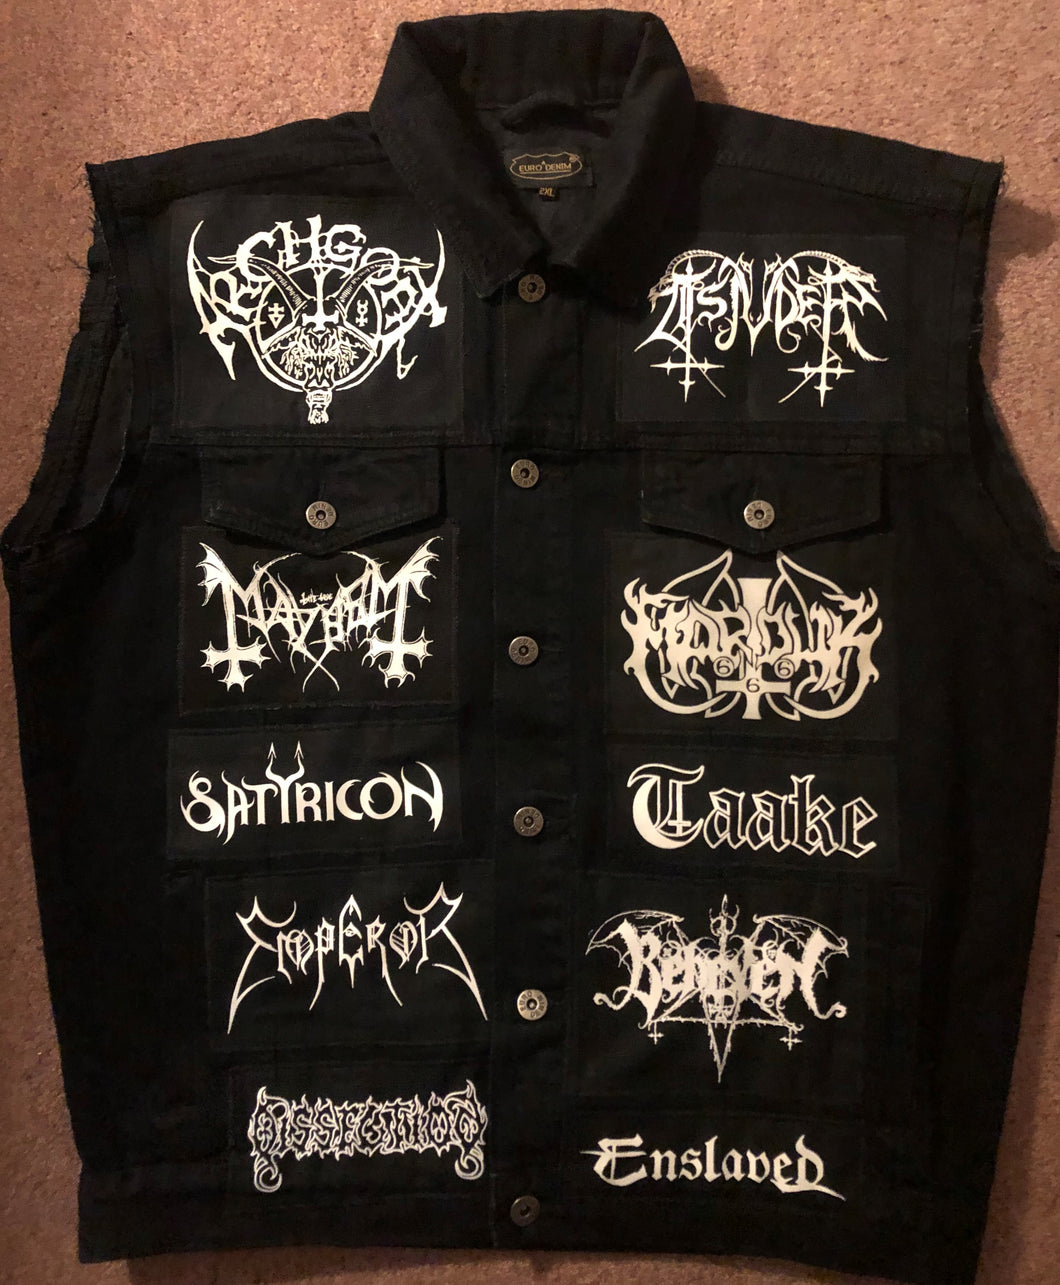 Black Metal Battle Jacket Cut-Off Denim Vest Bathory Hordes Rocker +10 Marduk Mayhem Emperor